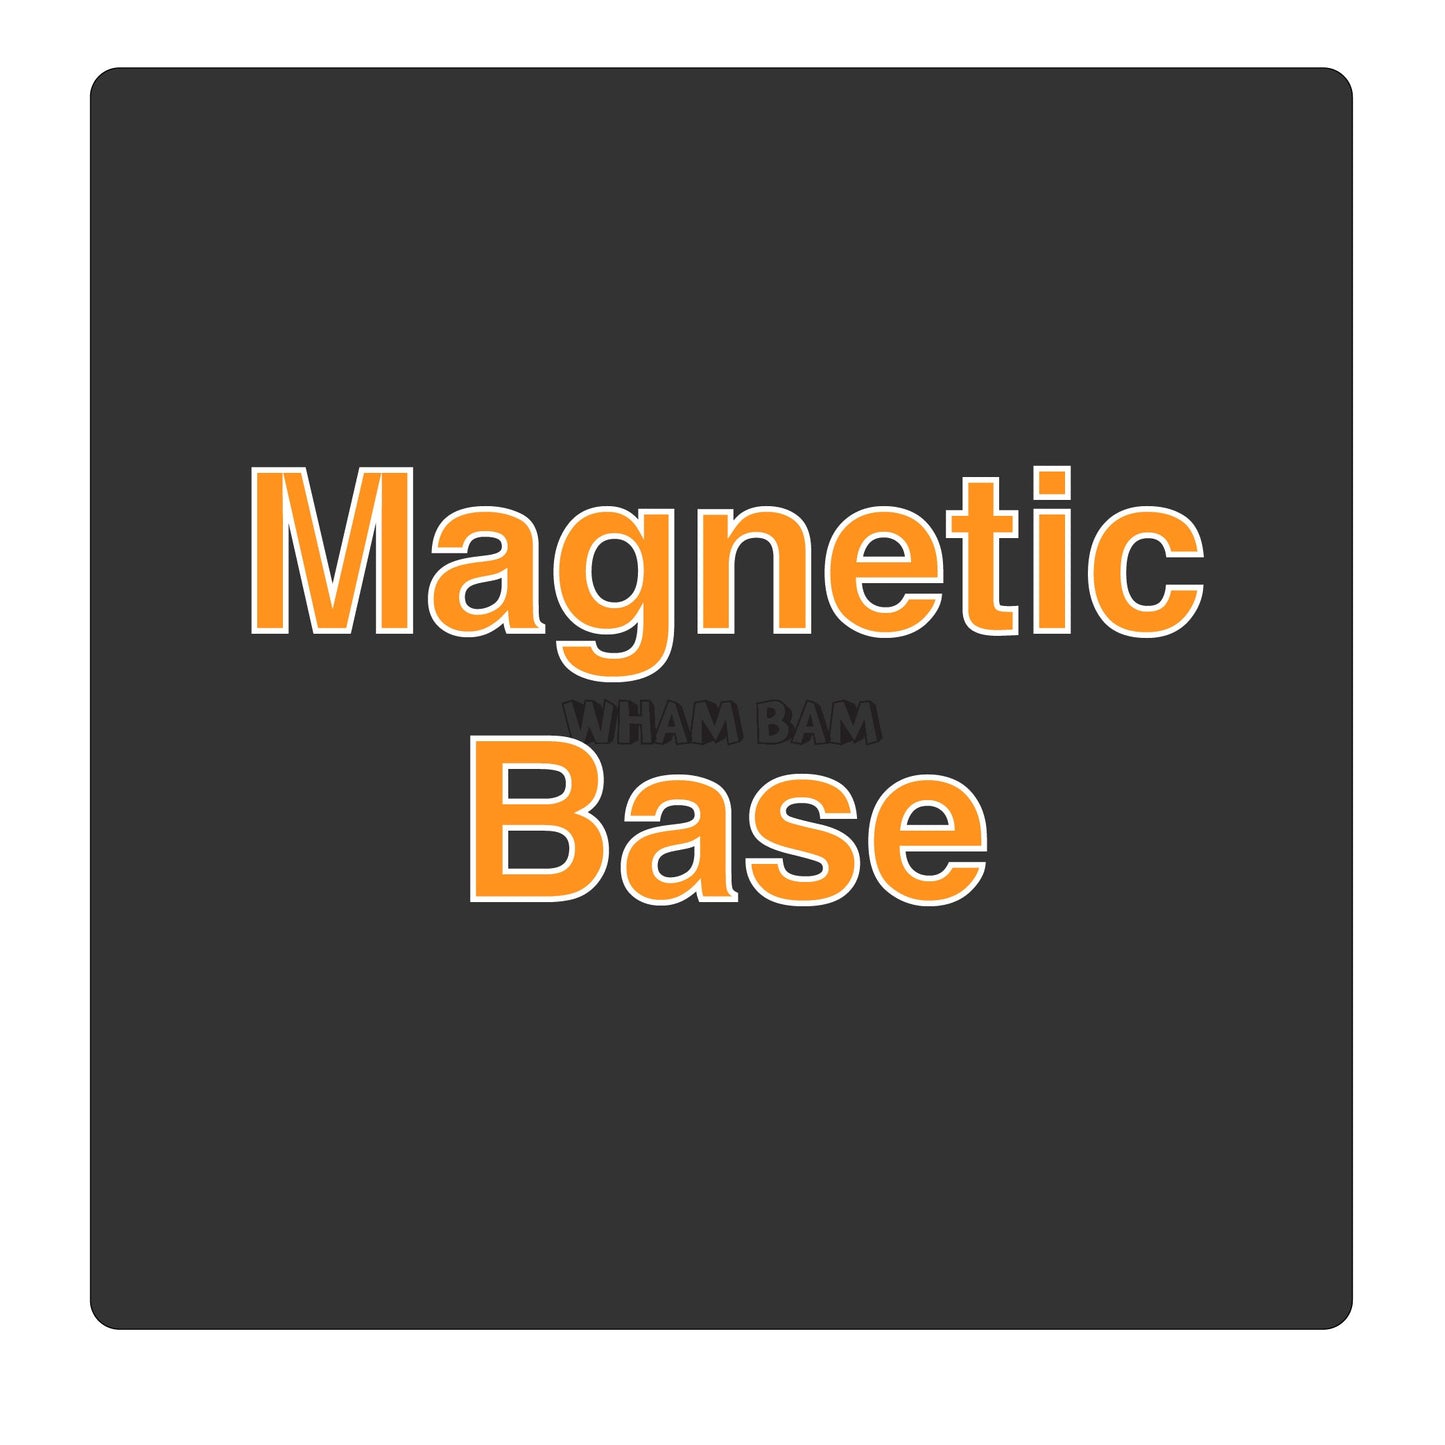 Magnetic Base - 470 x 470 - Creality CR-10 Max